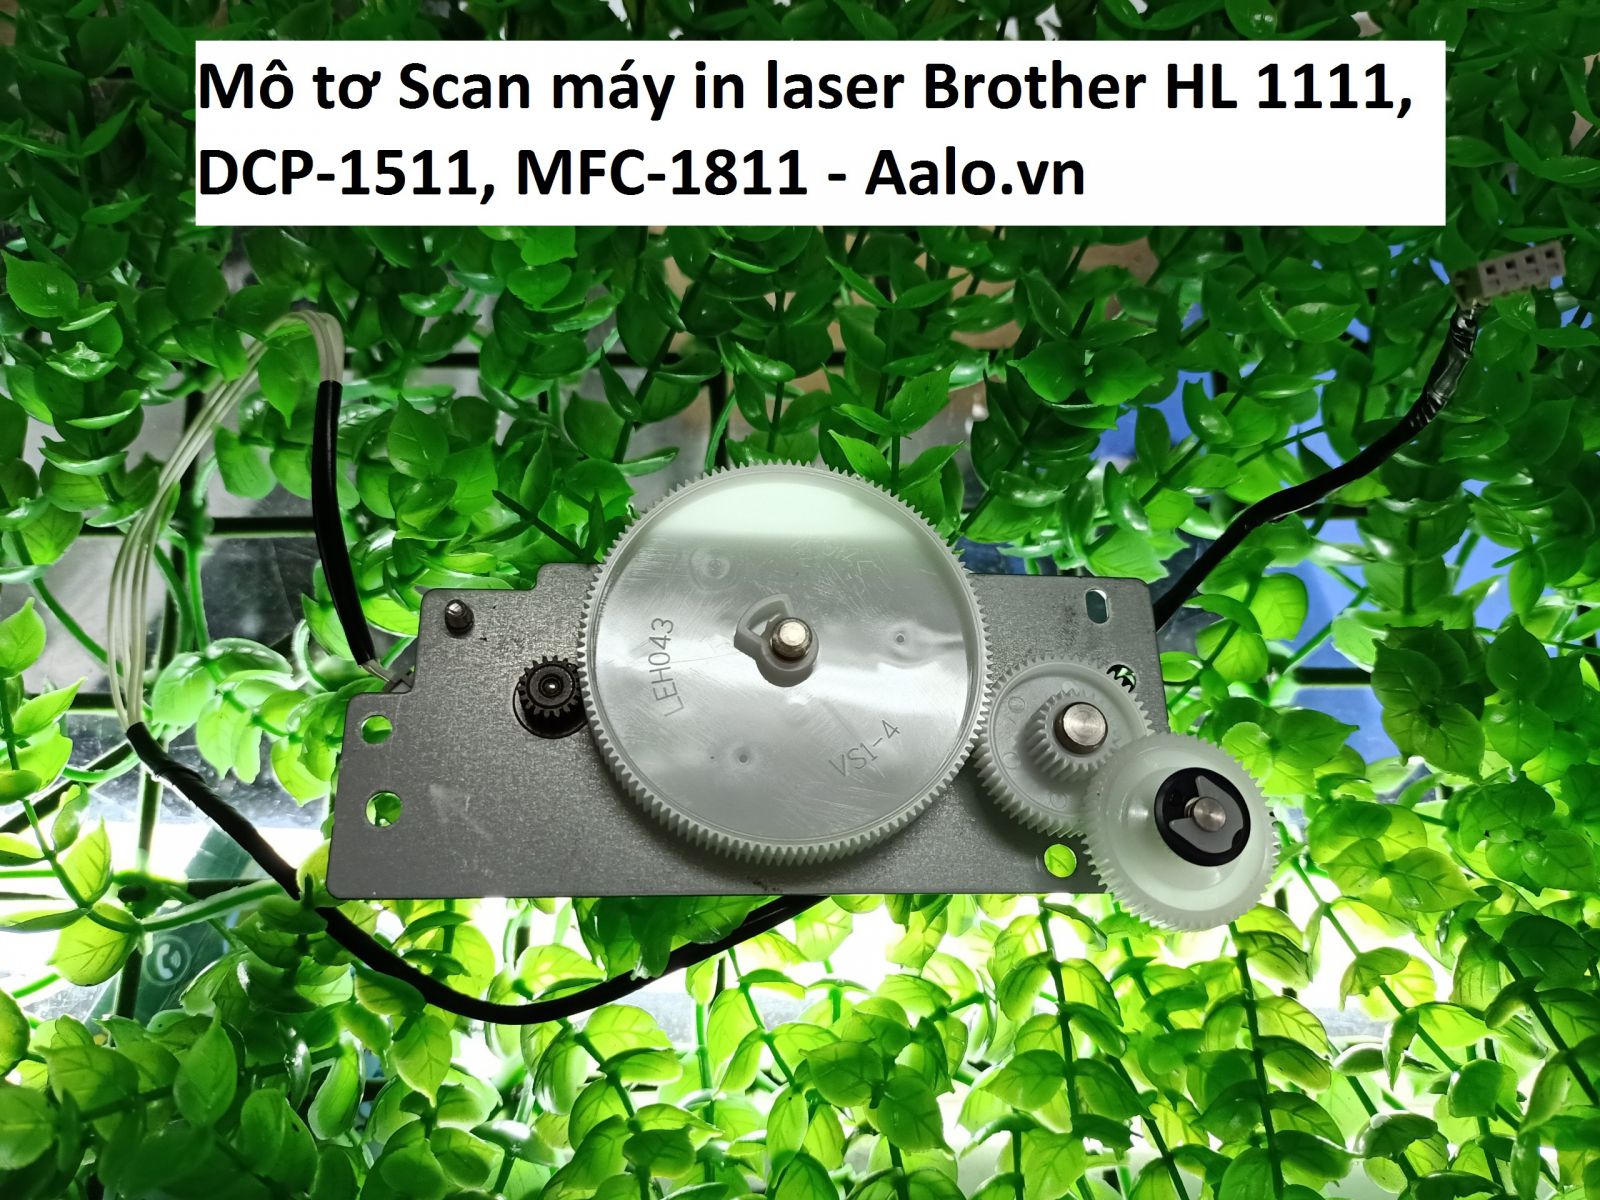 Mô tơ Scan máy in laser Brother HL 1111, DCP-1511, MFC-1811 - Aalo.vn